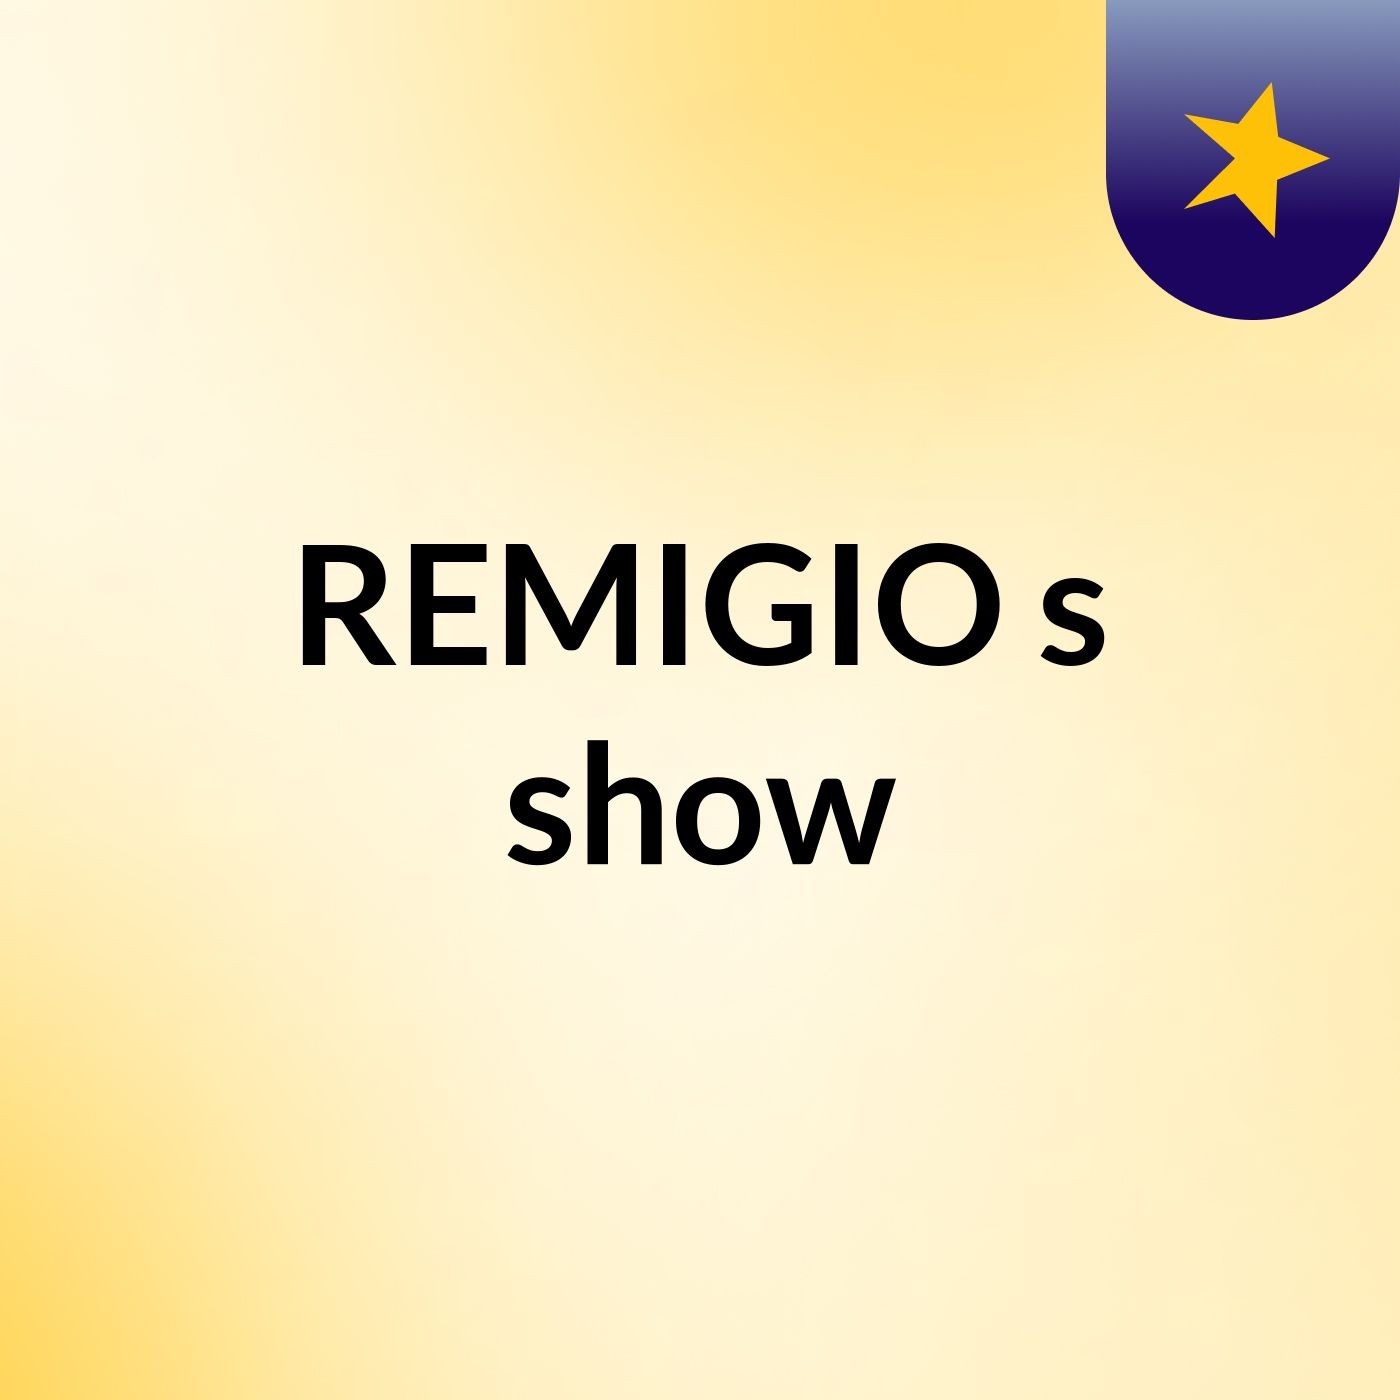 REMIGIO's show